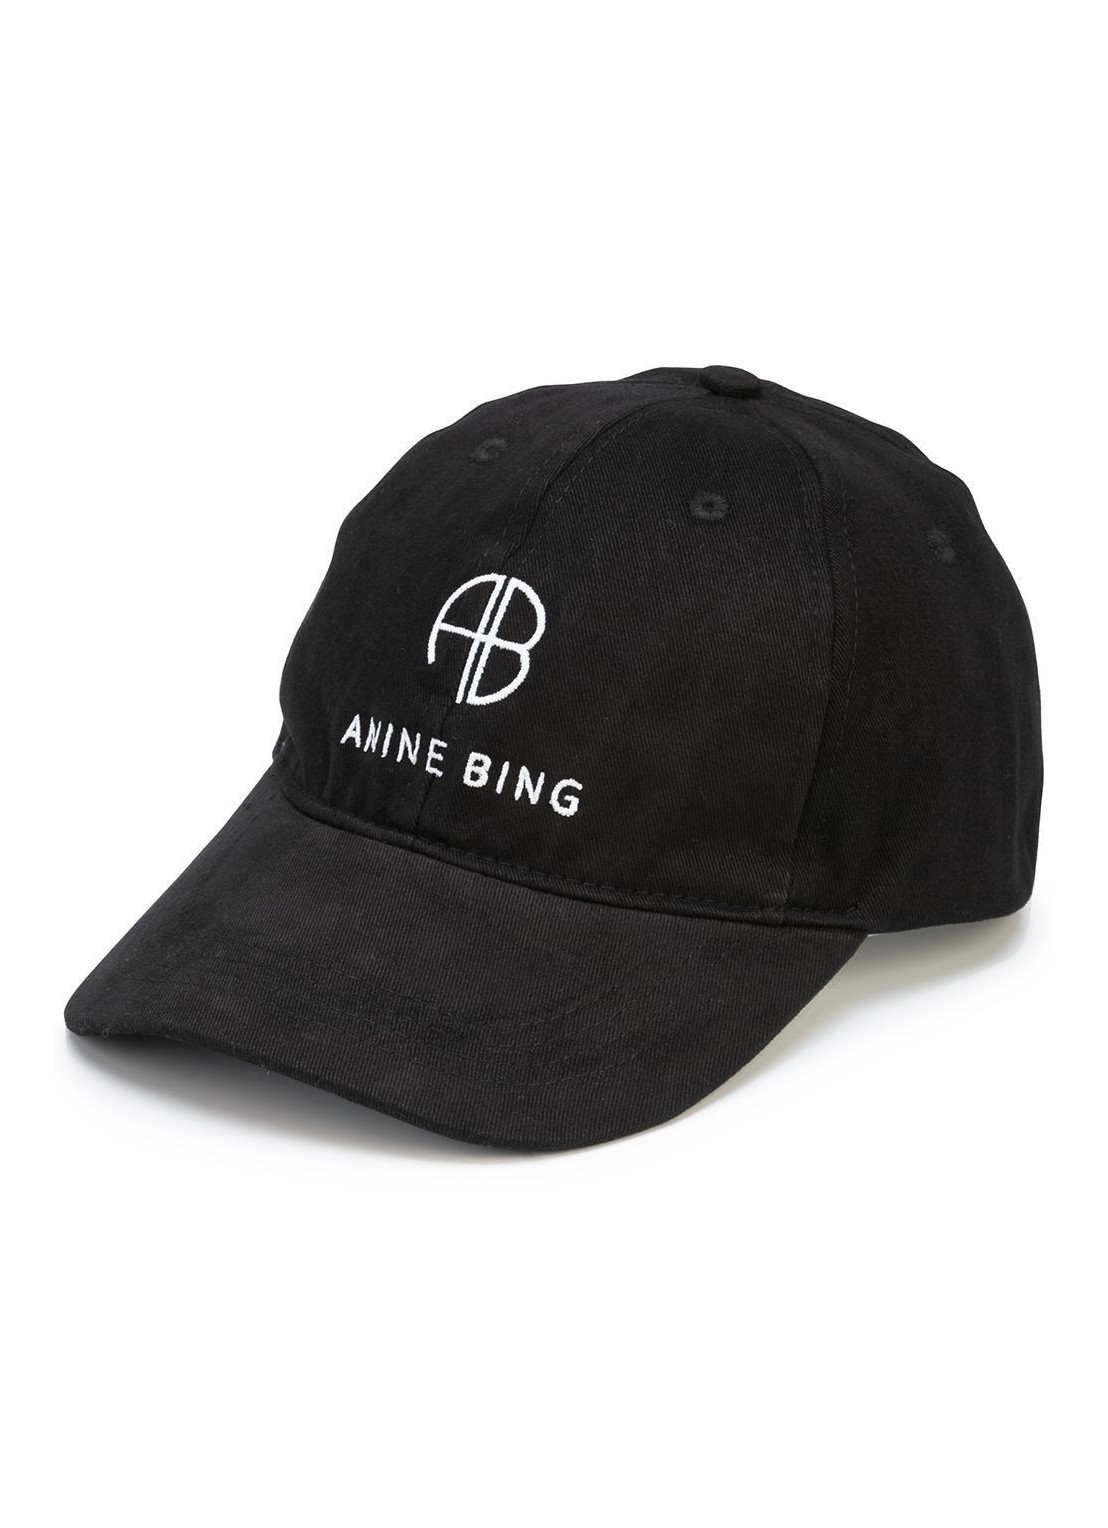 Gorras anine bing cap woman jeremy baseball cap s129084000 black talla T/U
 